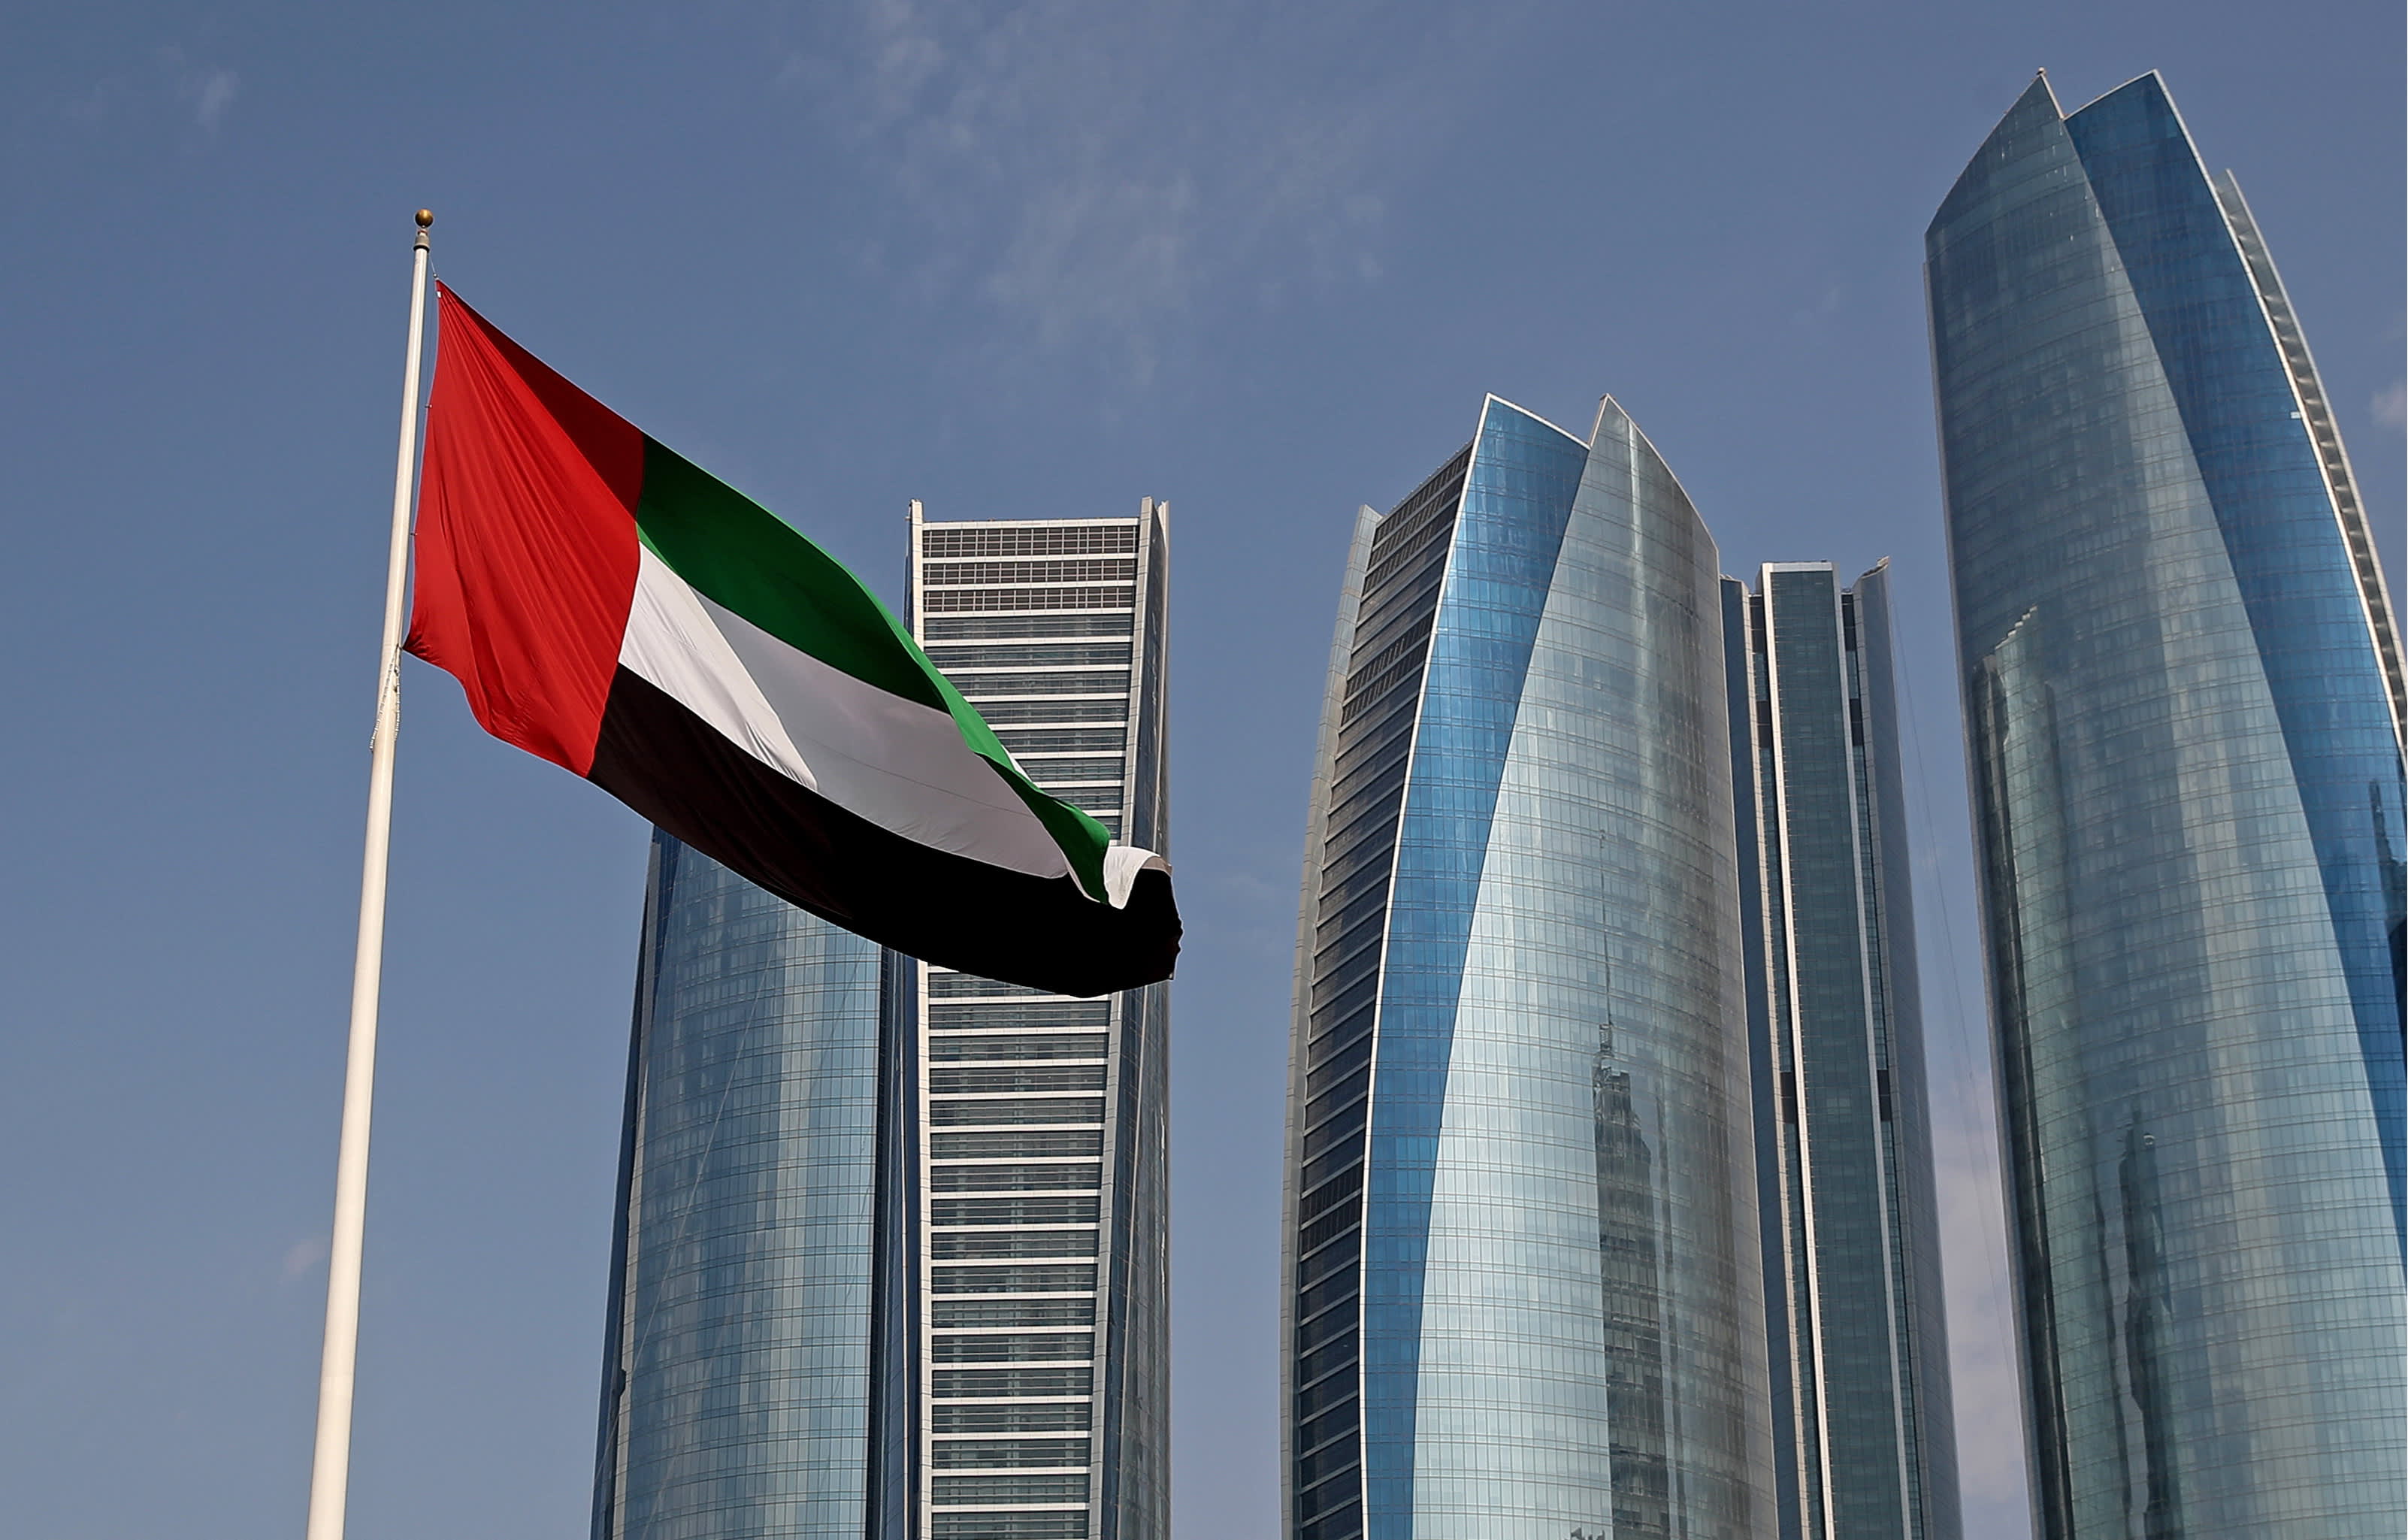 UAE reinstates visa-free entry for Ukrainians in quick reversal, offers